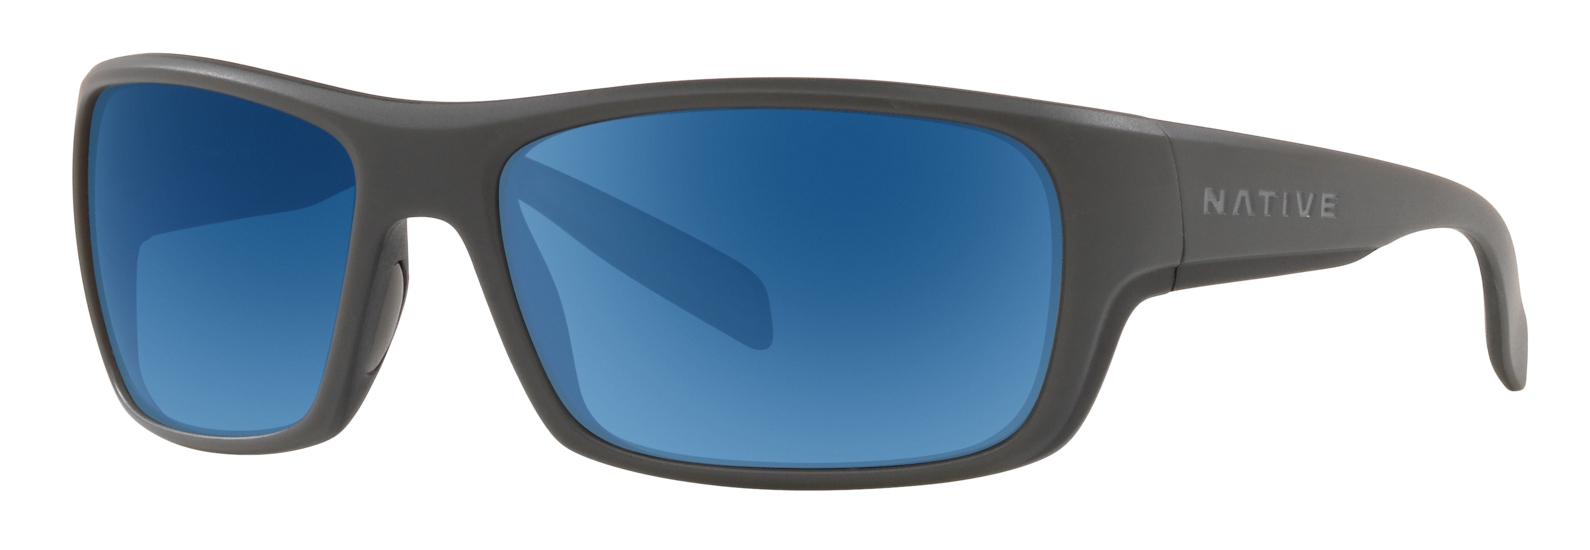 Native Eyewear Eddyline sunglasses in gray and black with blue polarized lenses.